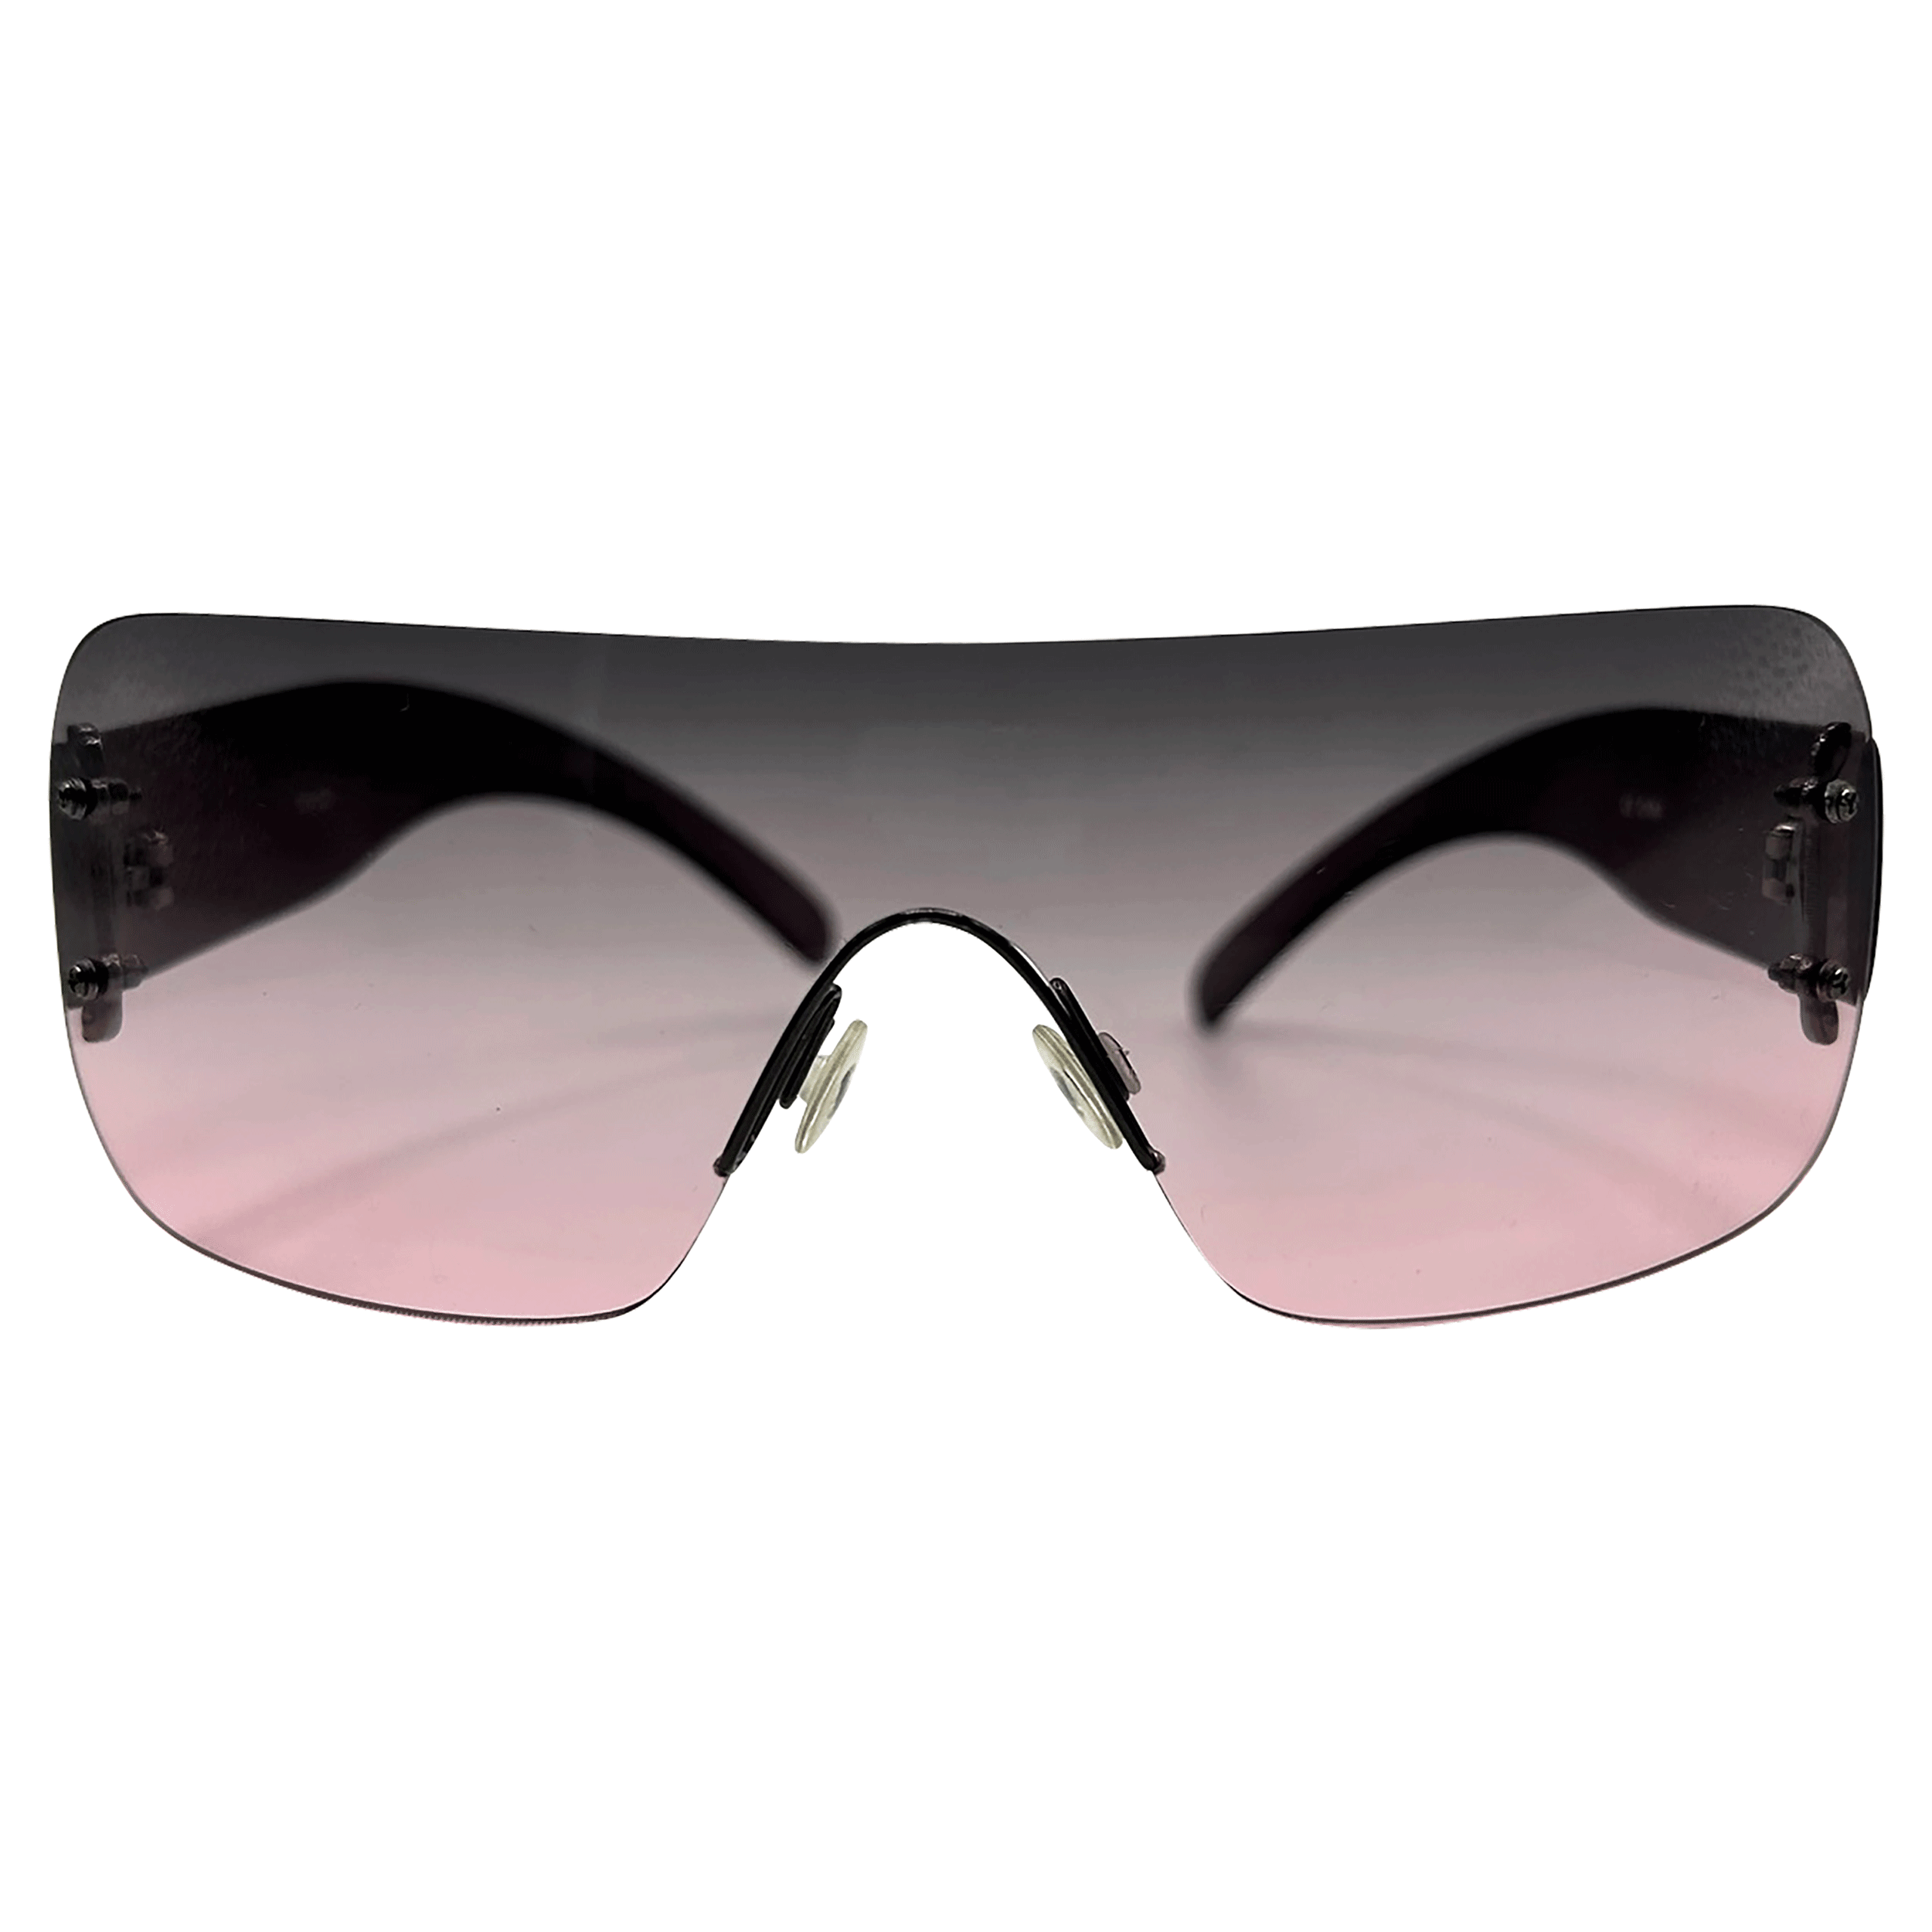 Shop CLANK tortoise vintage sports sunglasses for women